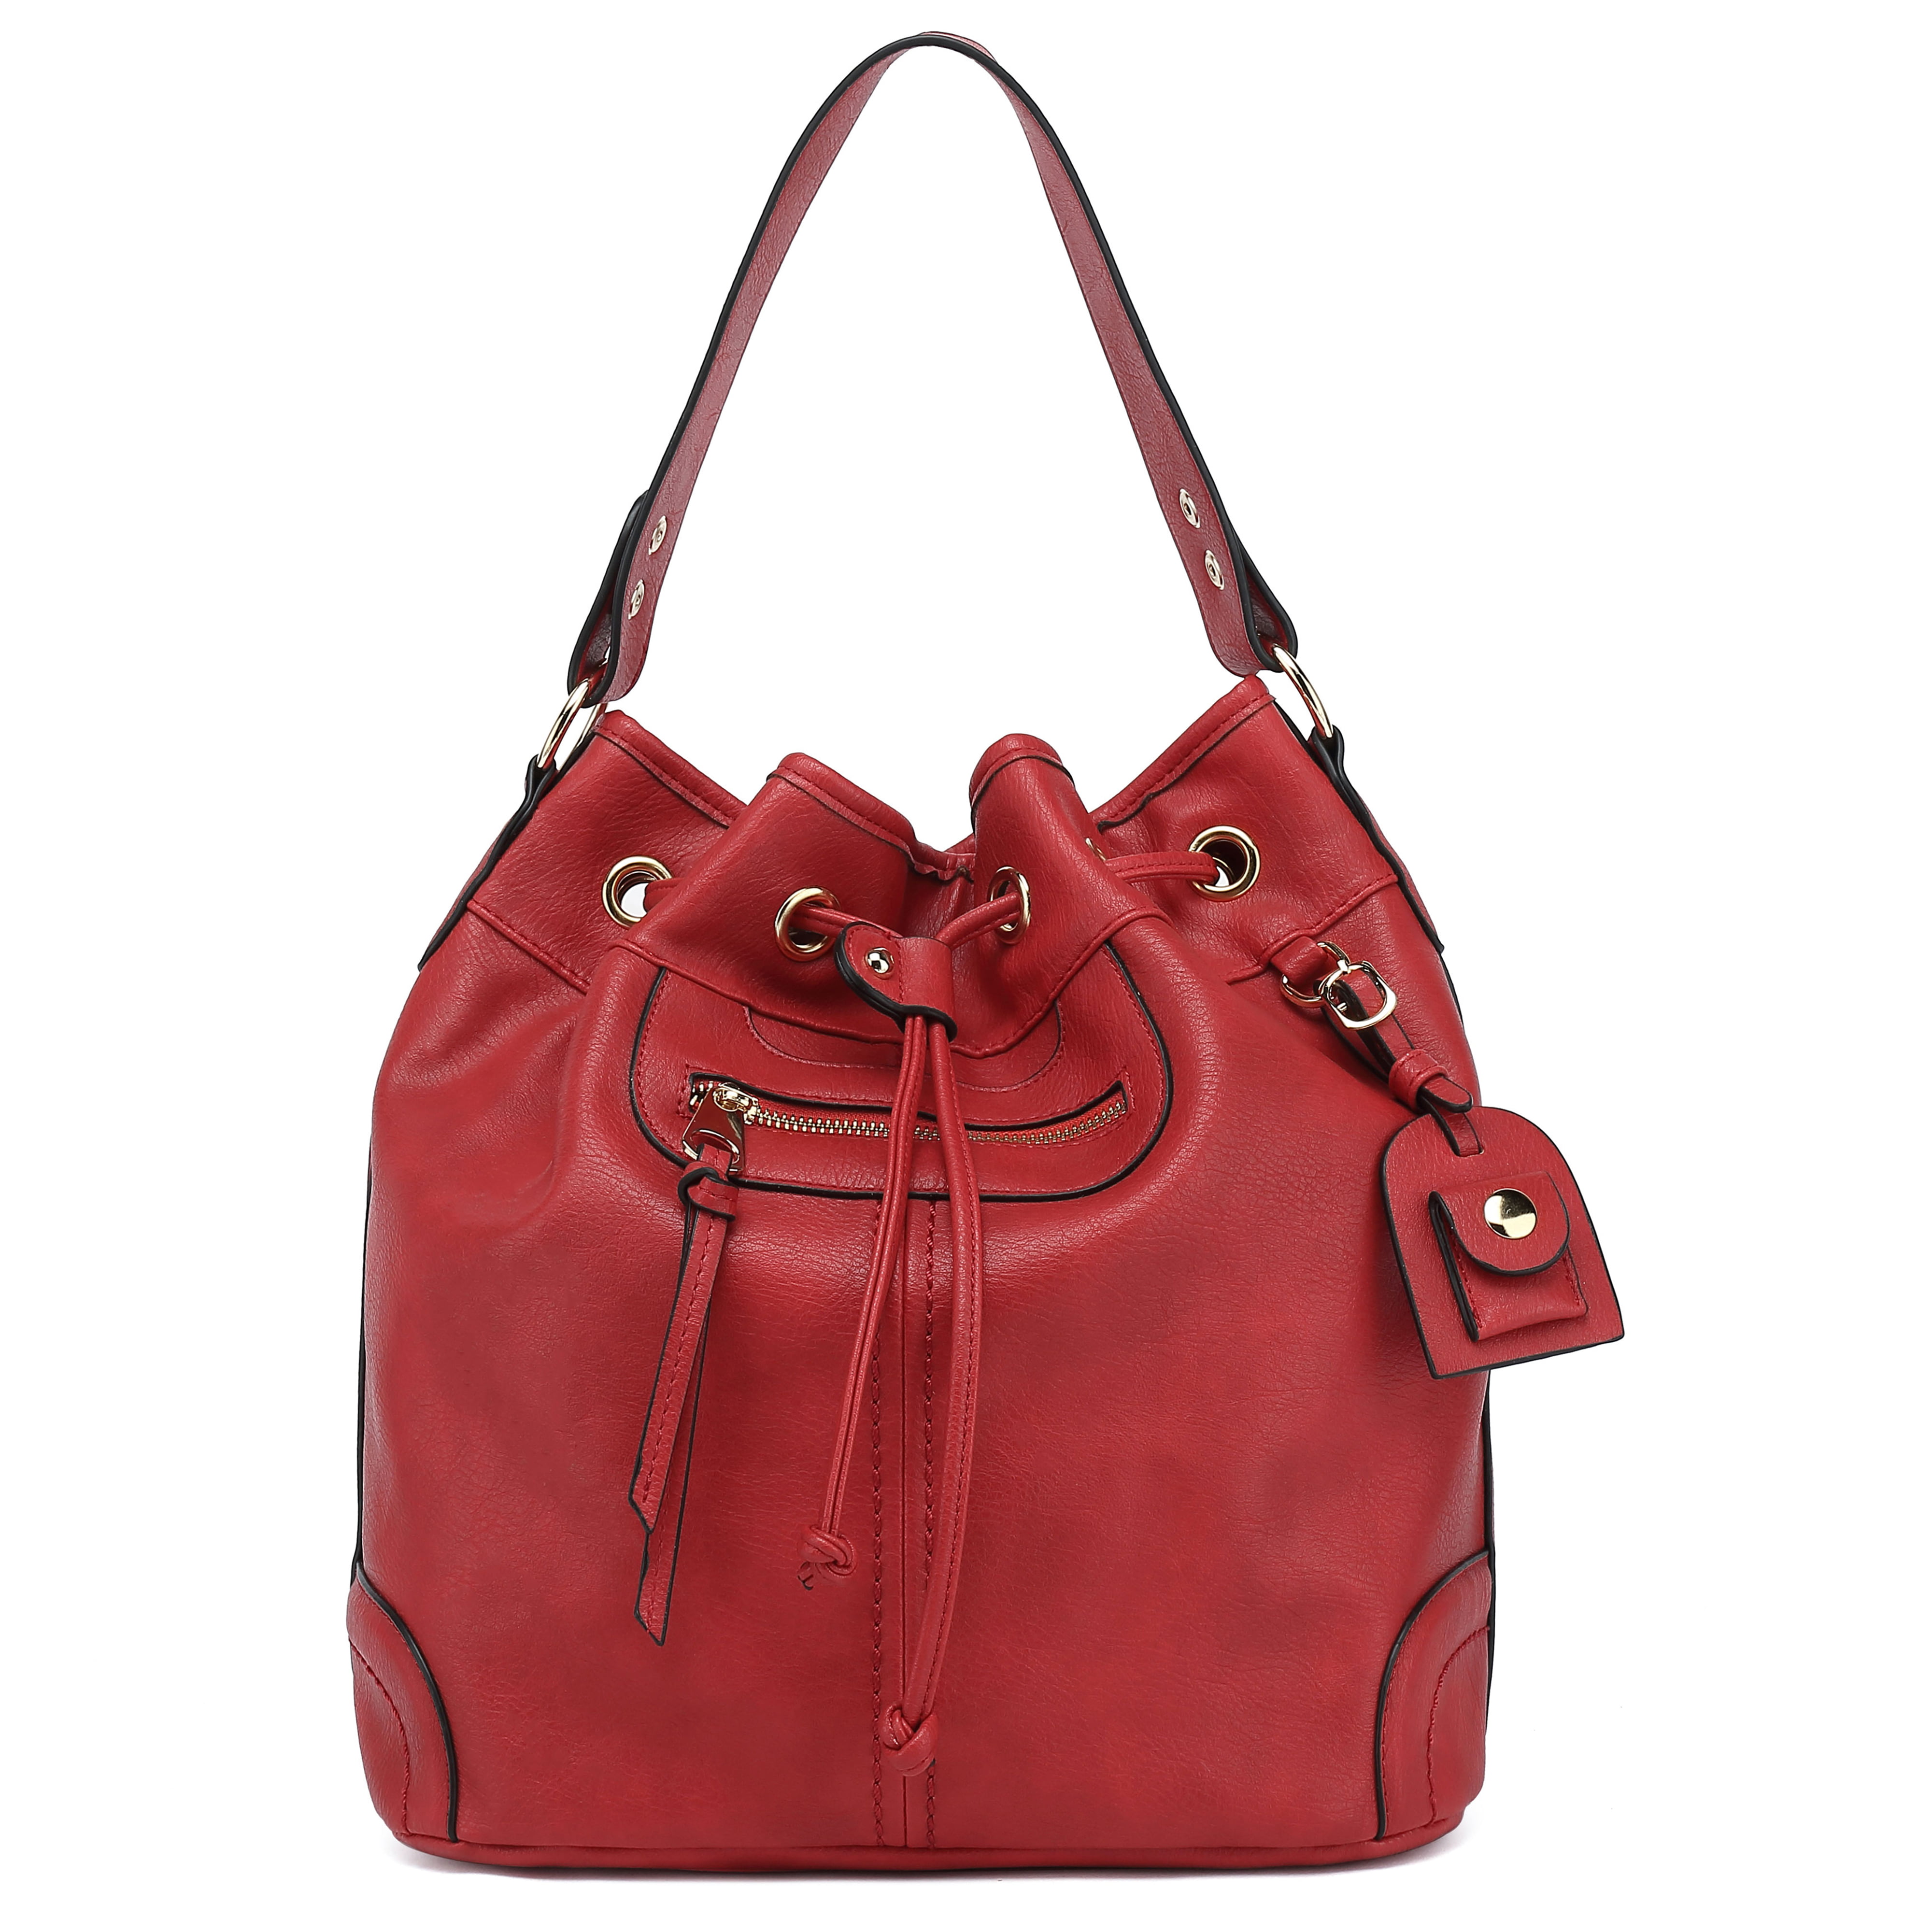 SCARLETON Purses and Handbags Hobo Bags for Women H1078 Drawstring Bucket Bag Multi Pocket Shoulder Bag Crossbody Bag 